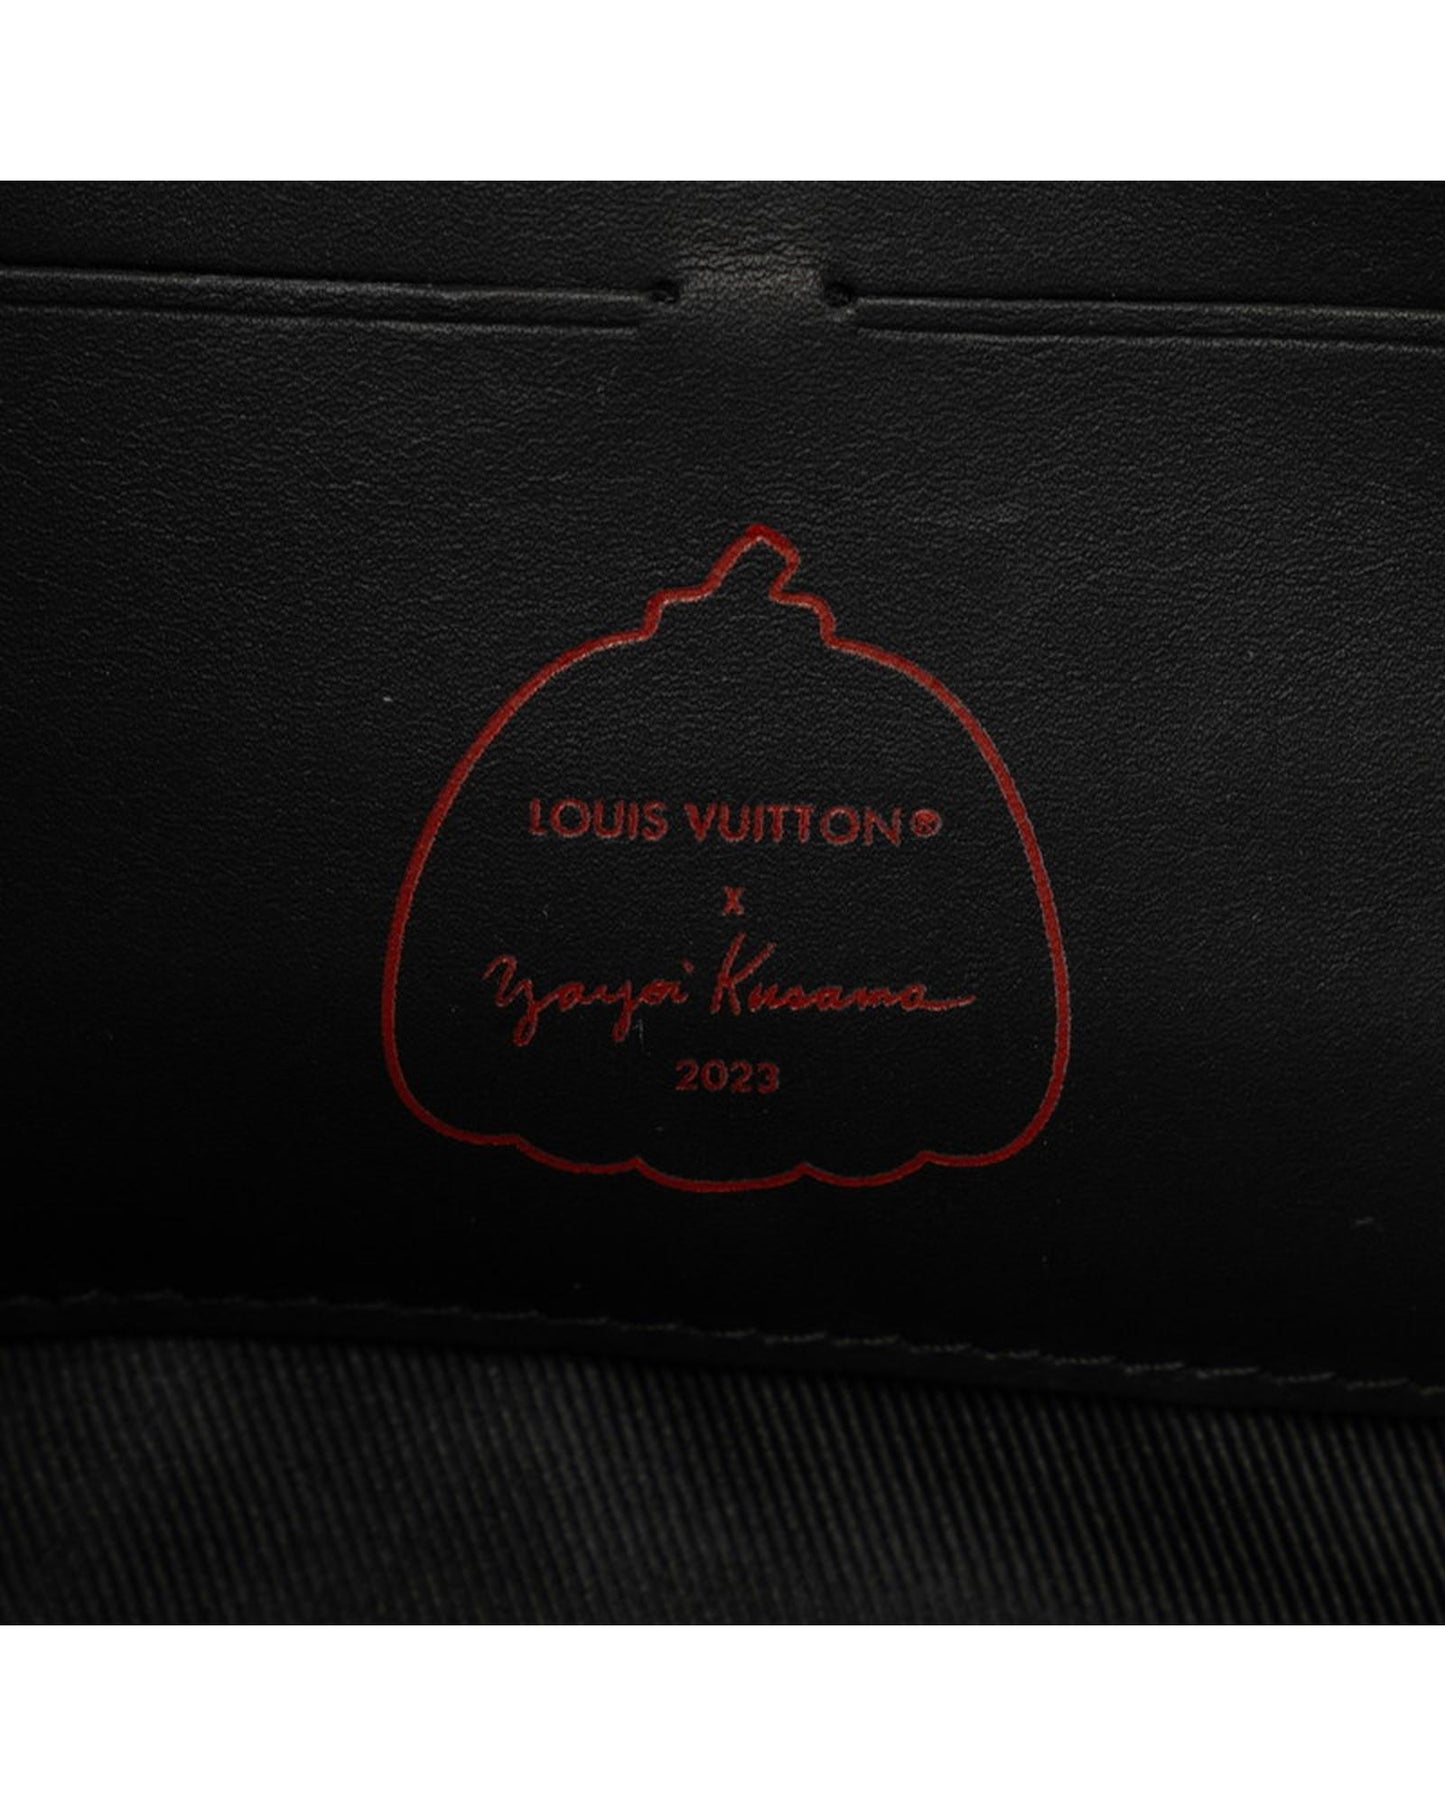 Louis Vuitton Women's Soft Trunk Wearable Wallet Bag by Yayoi Kusama for Louis Vuitton in Black